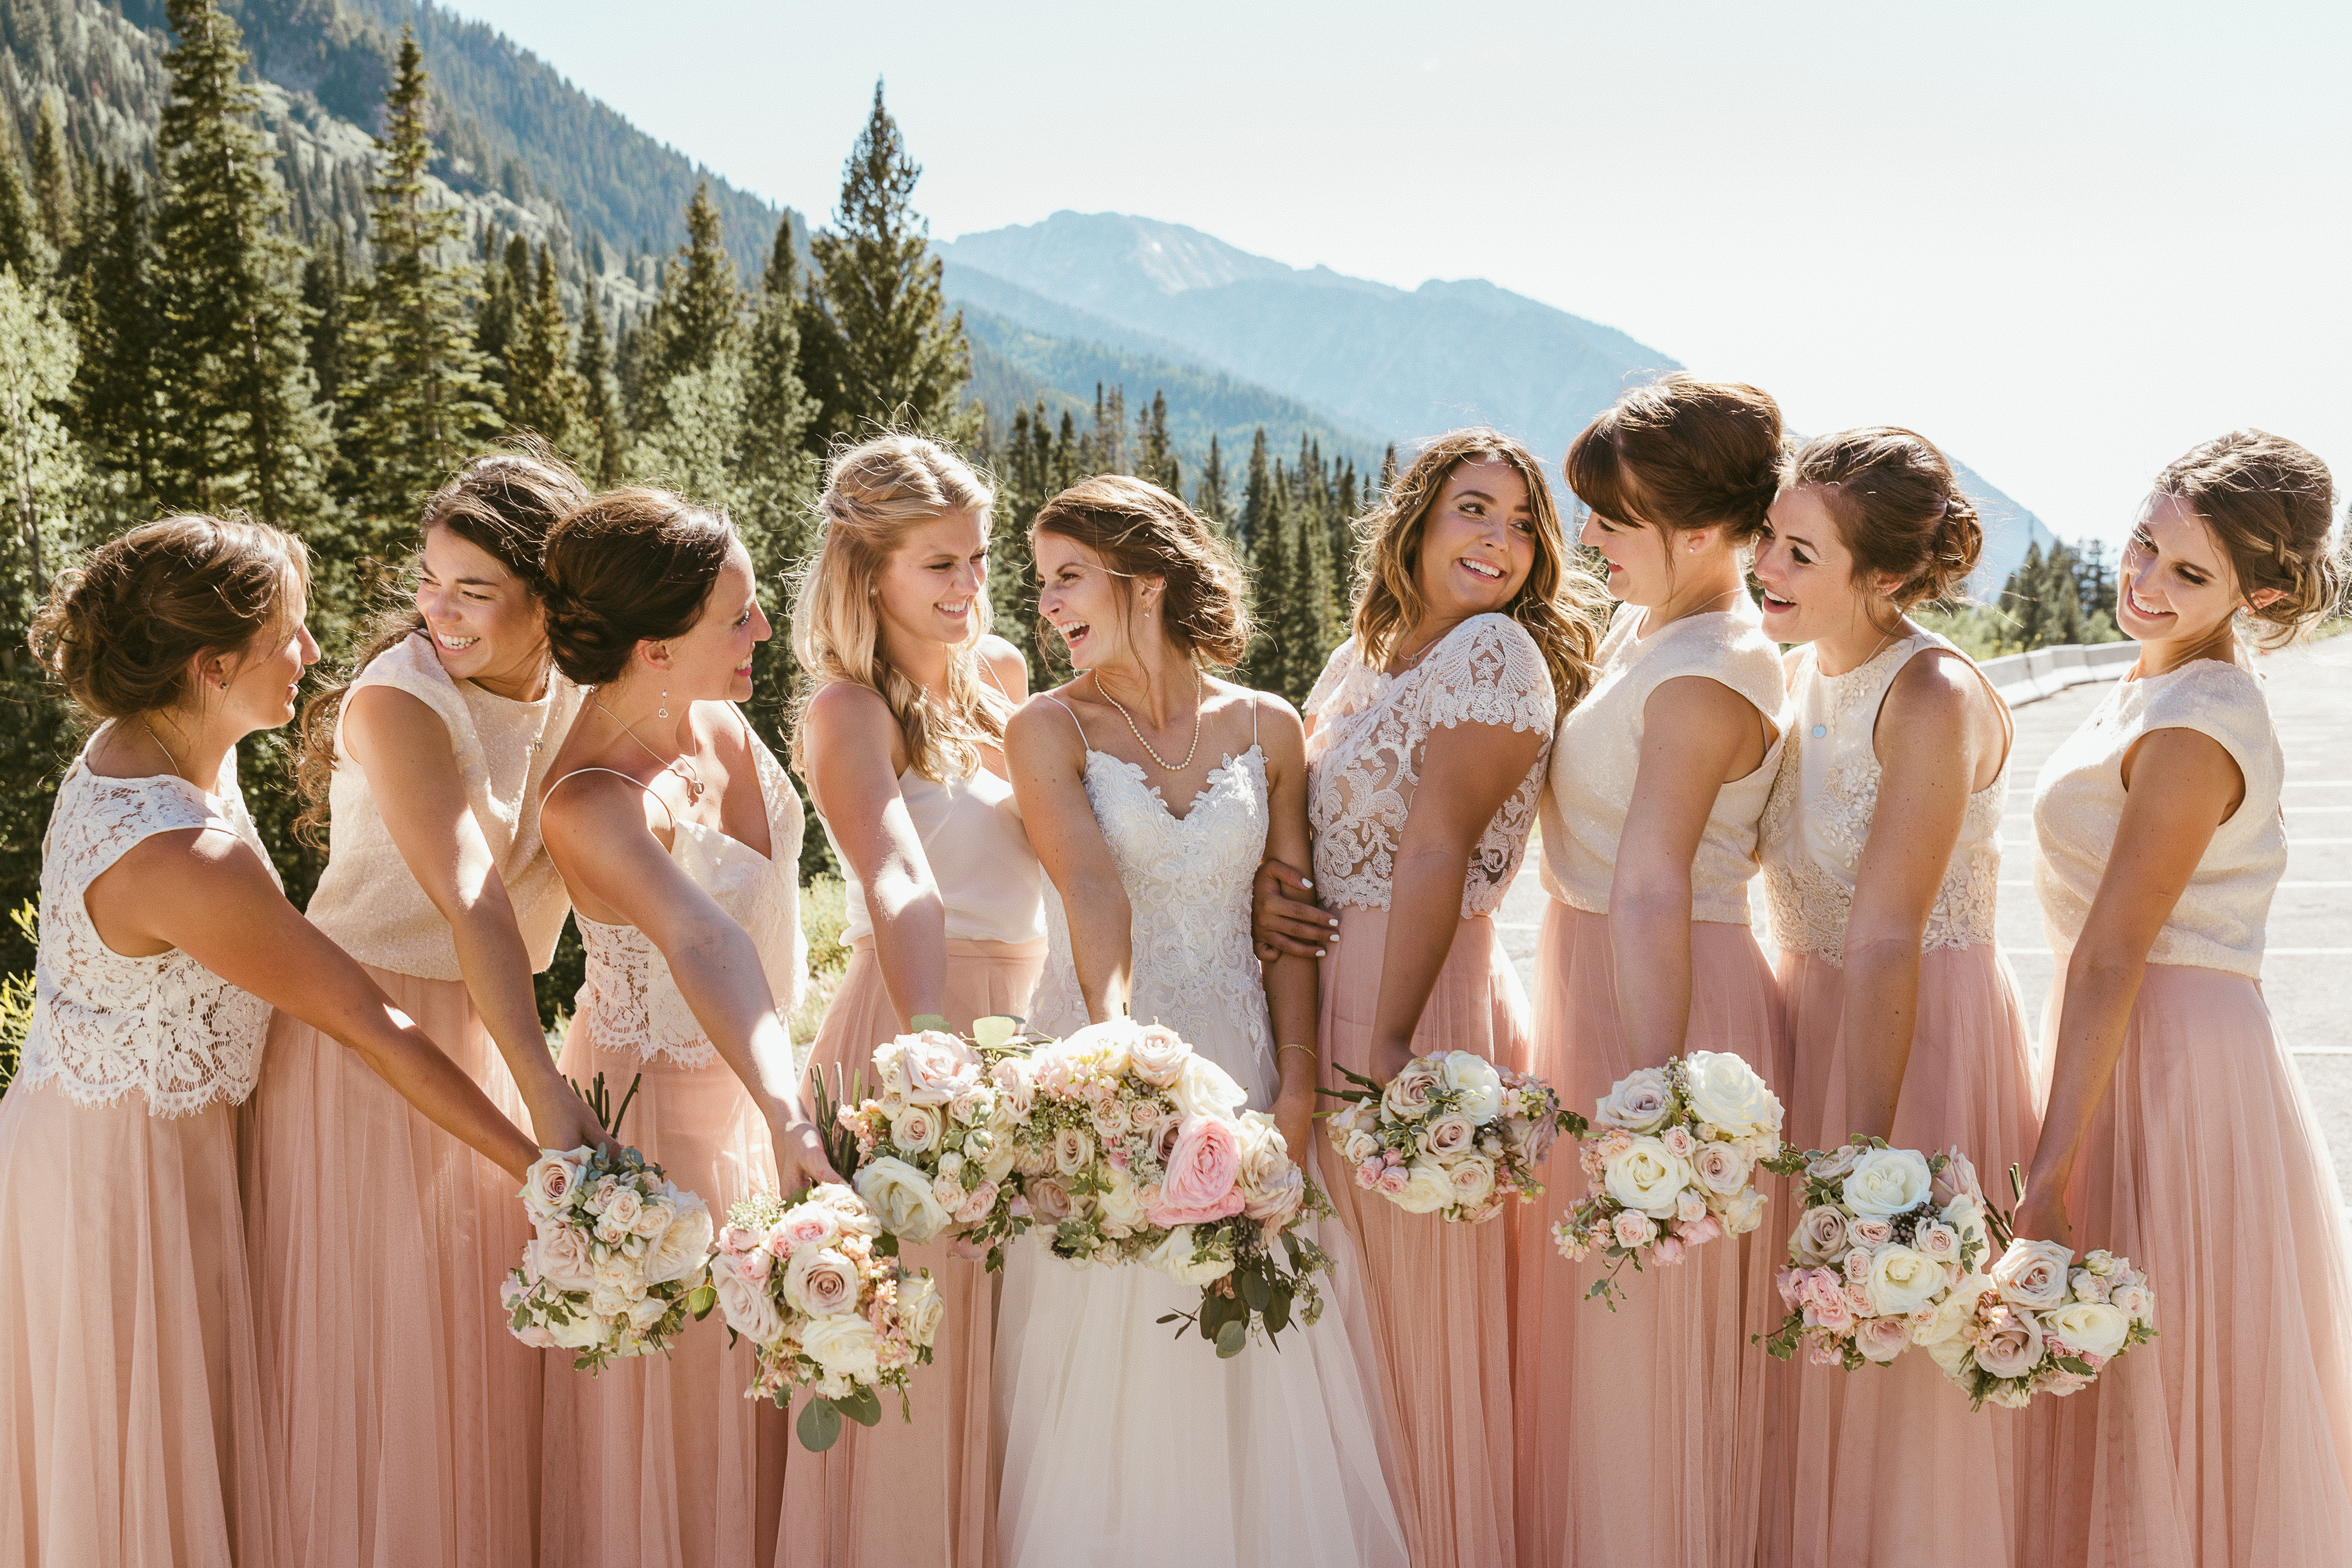 Bridesmaids Wedding Dresses Anthropology Mountains Utah Photographer B.Fotographic1